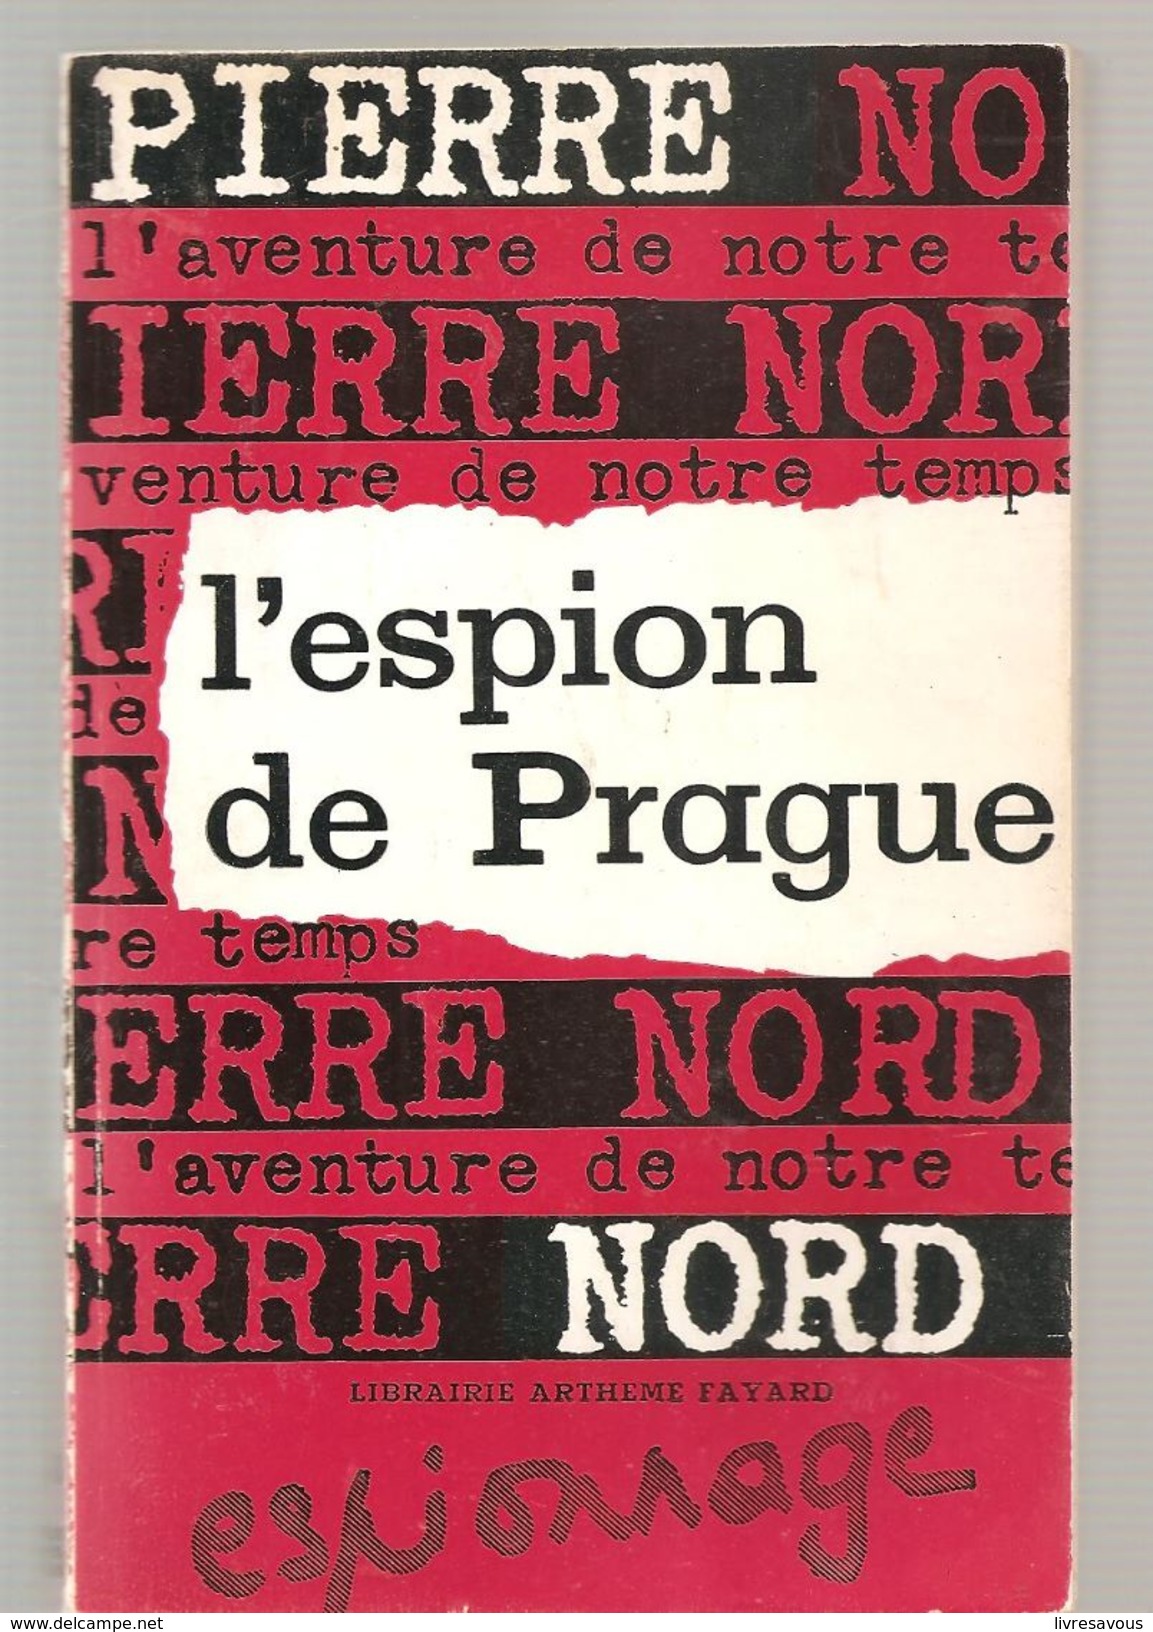 Pierre Nord L'espion De Prague N°10 De 1962 Librairie Artheme Fayard - Pierre Nord